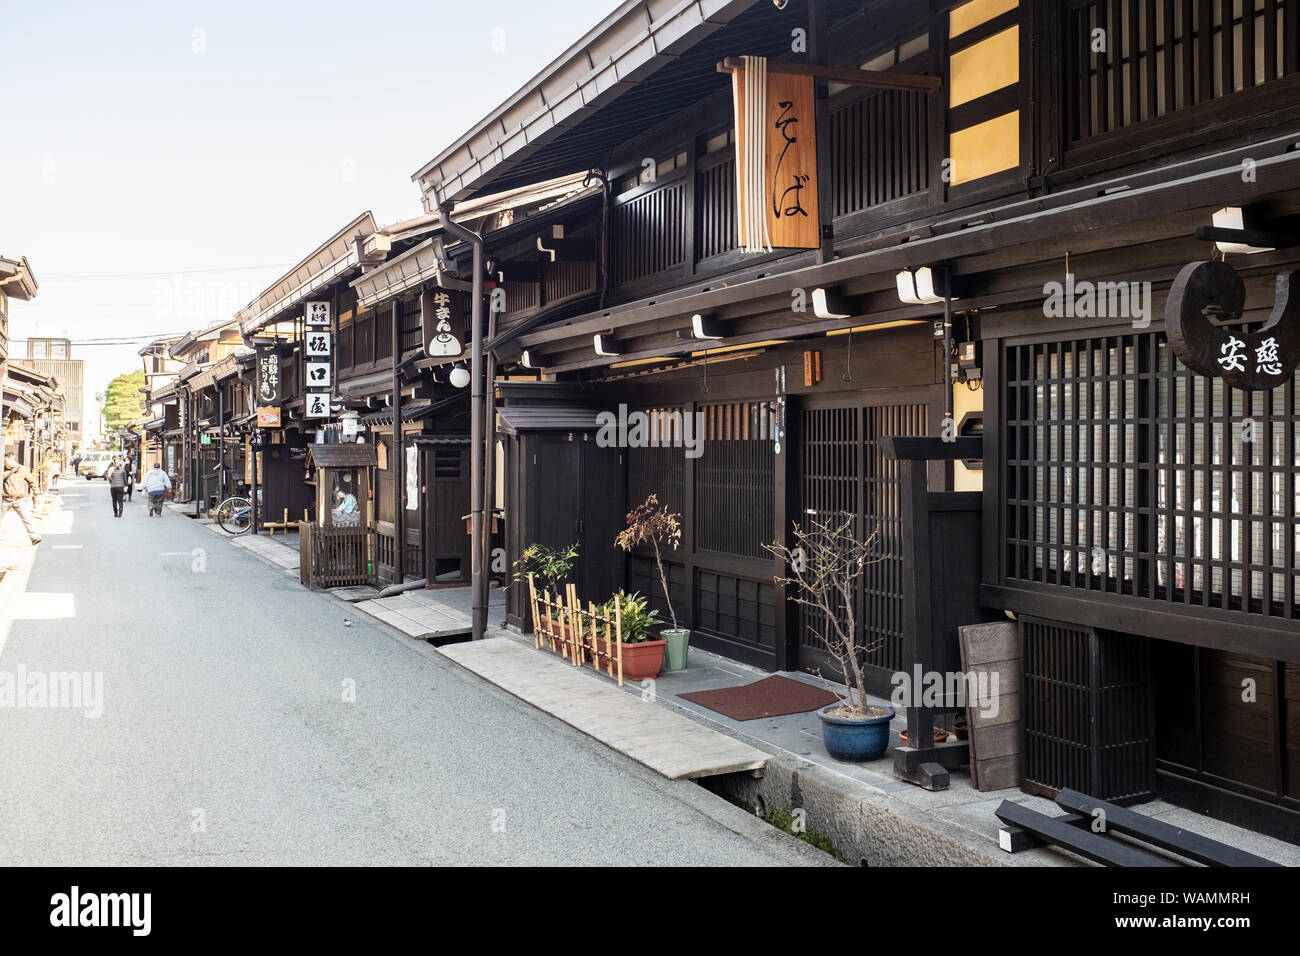 Traditionelle Architektur der Sanmachi-Suji Bezirk in Takayama, Japan Stockfoto